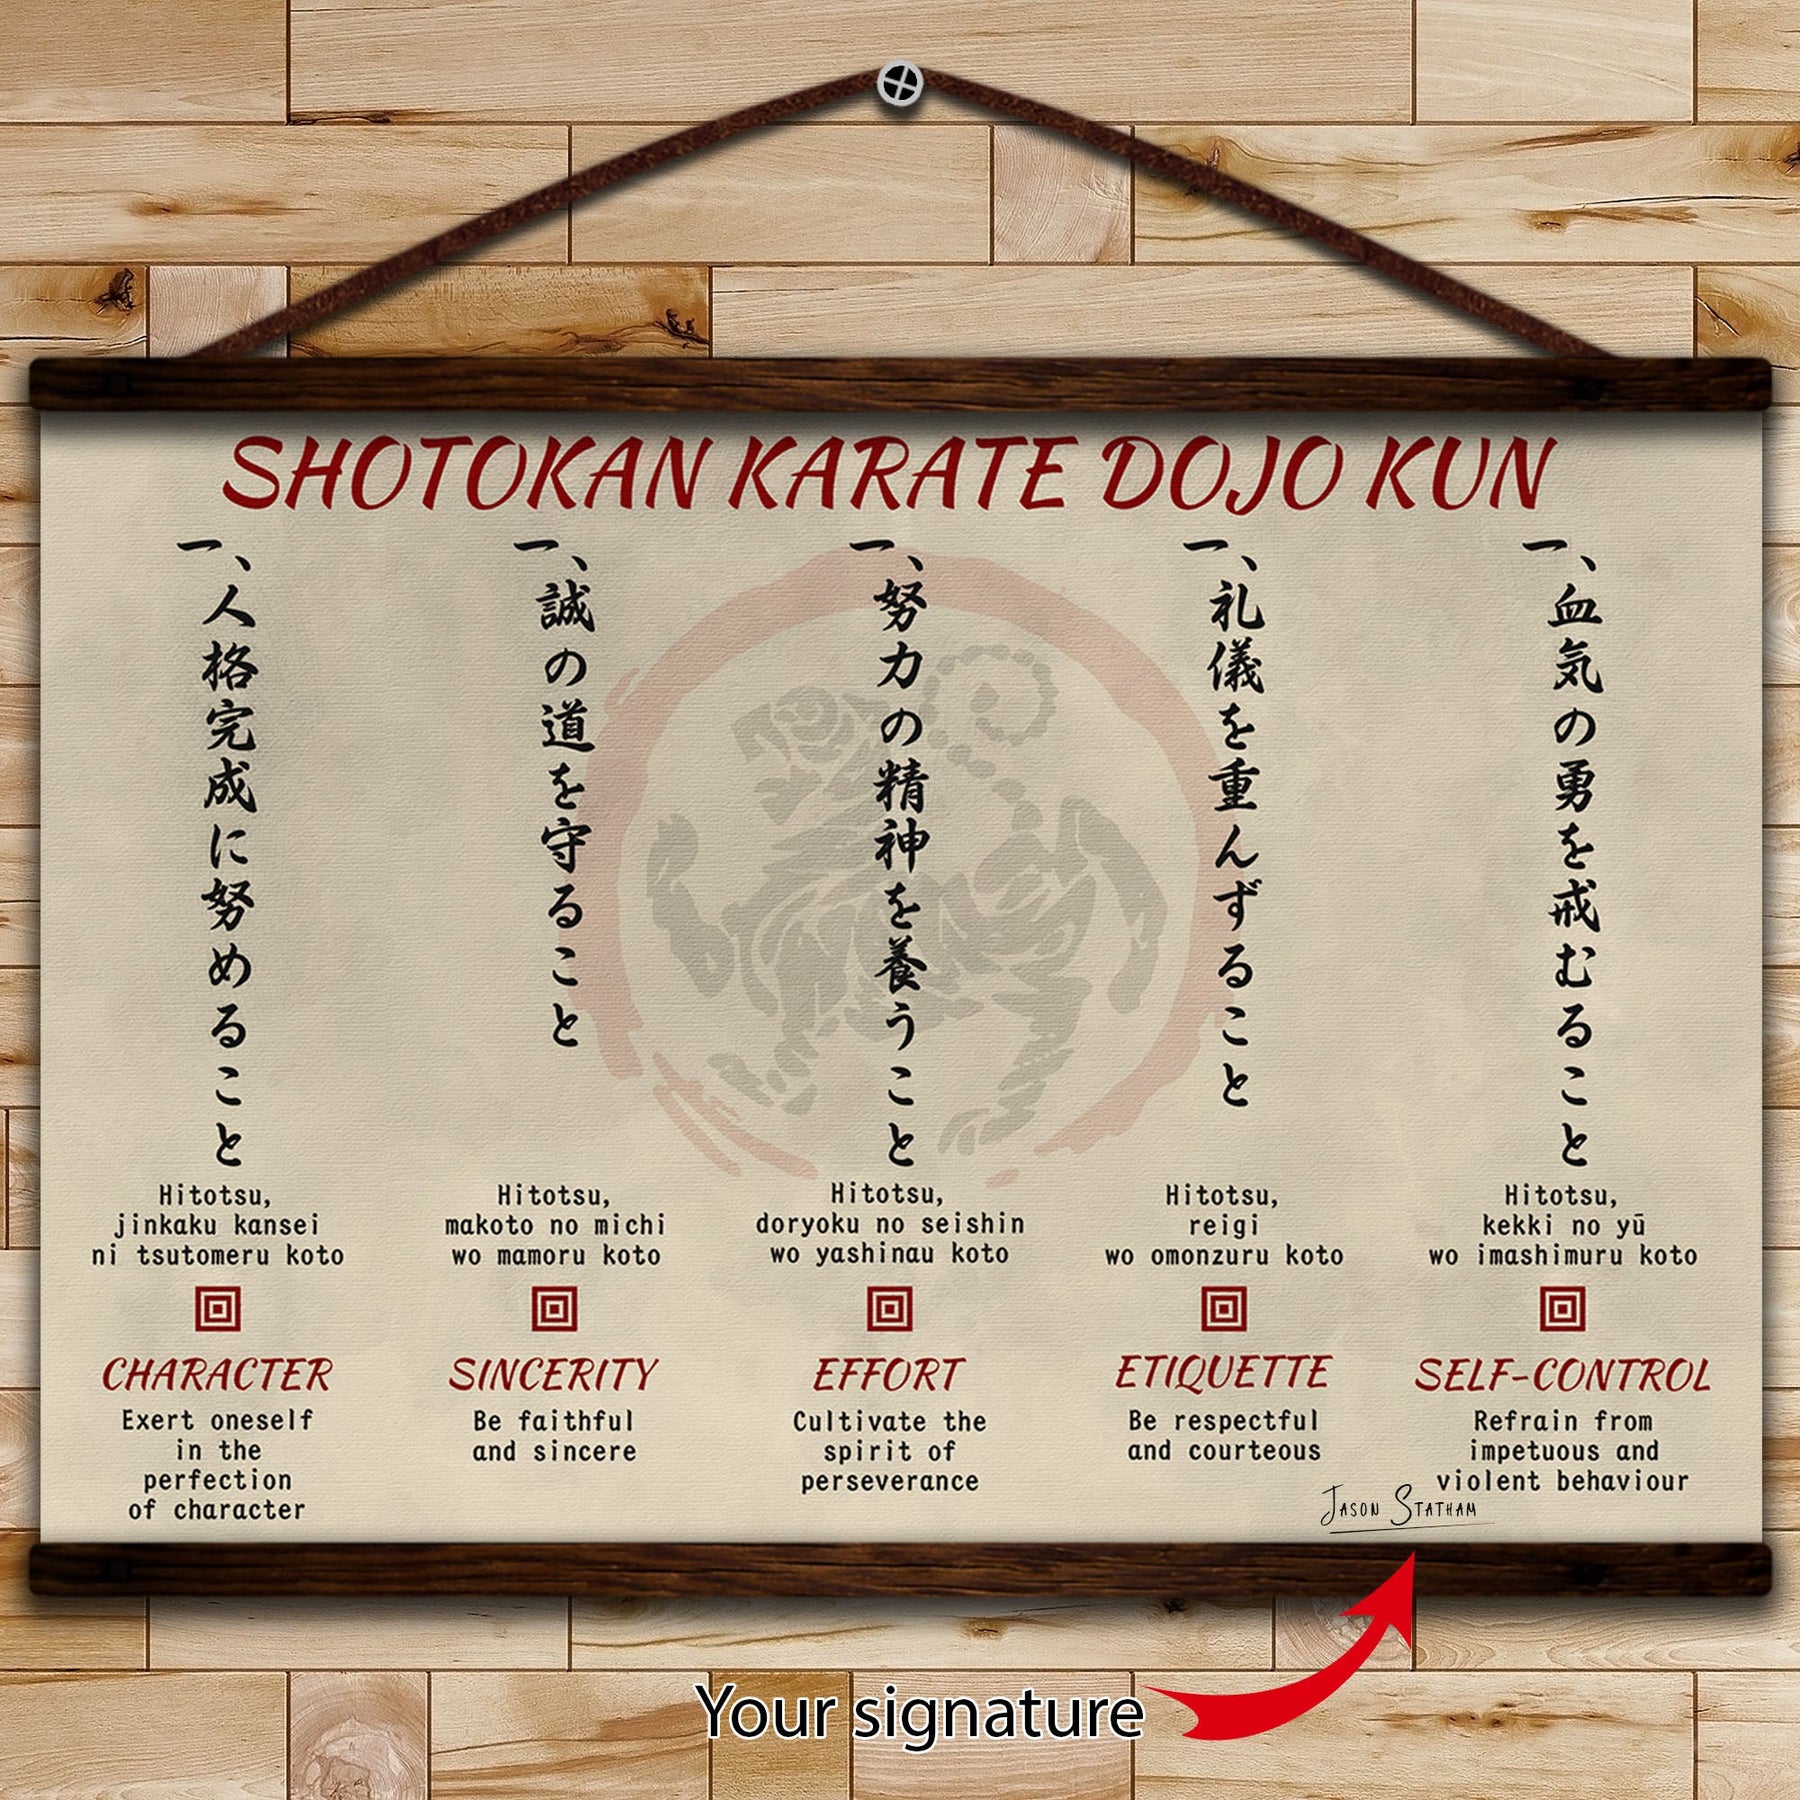 KA001 - Shotokan Karate Dojo Kun - Horizontal Poster - Horizontal Canvas - Karate Poster